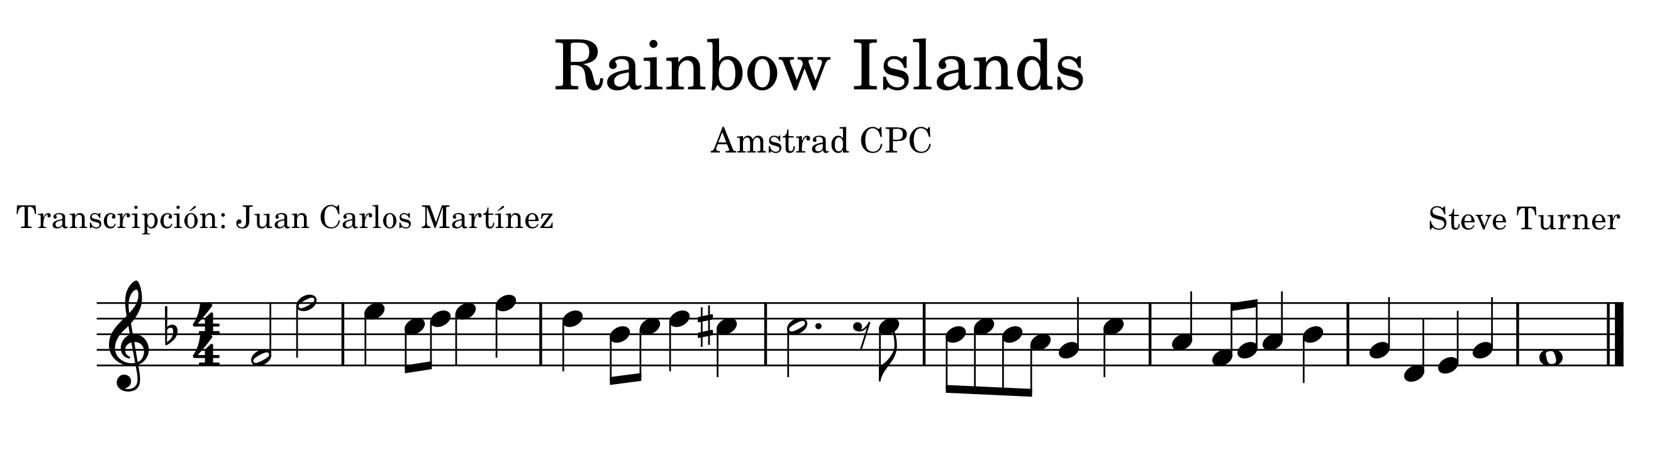 Rainbow Islands music